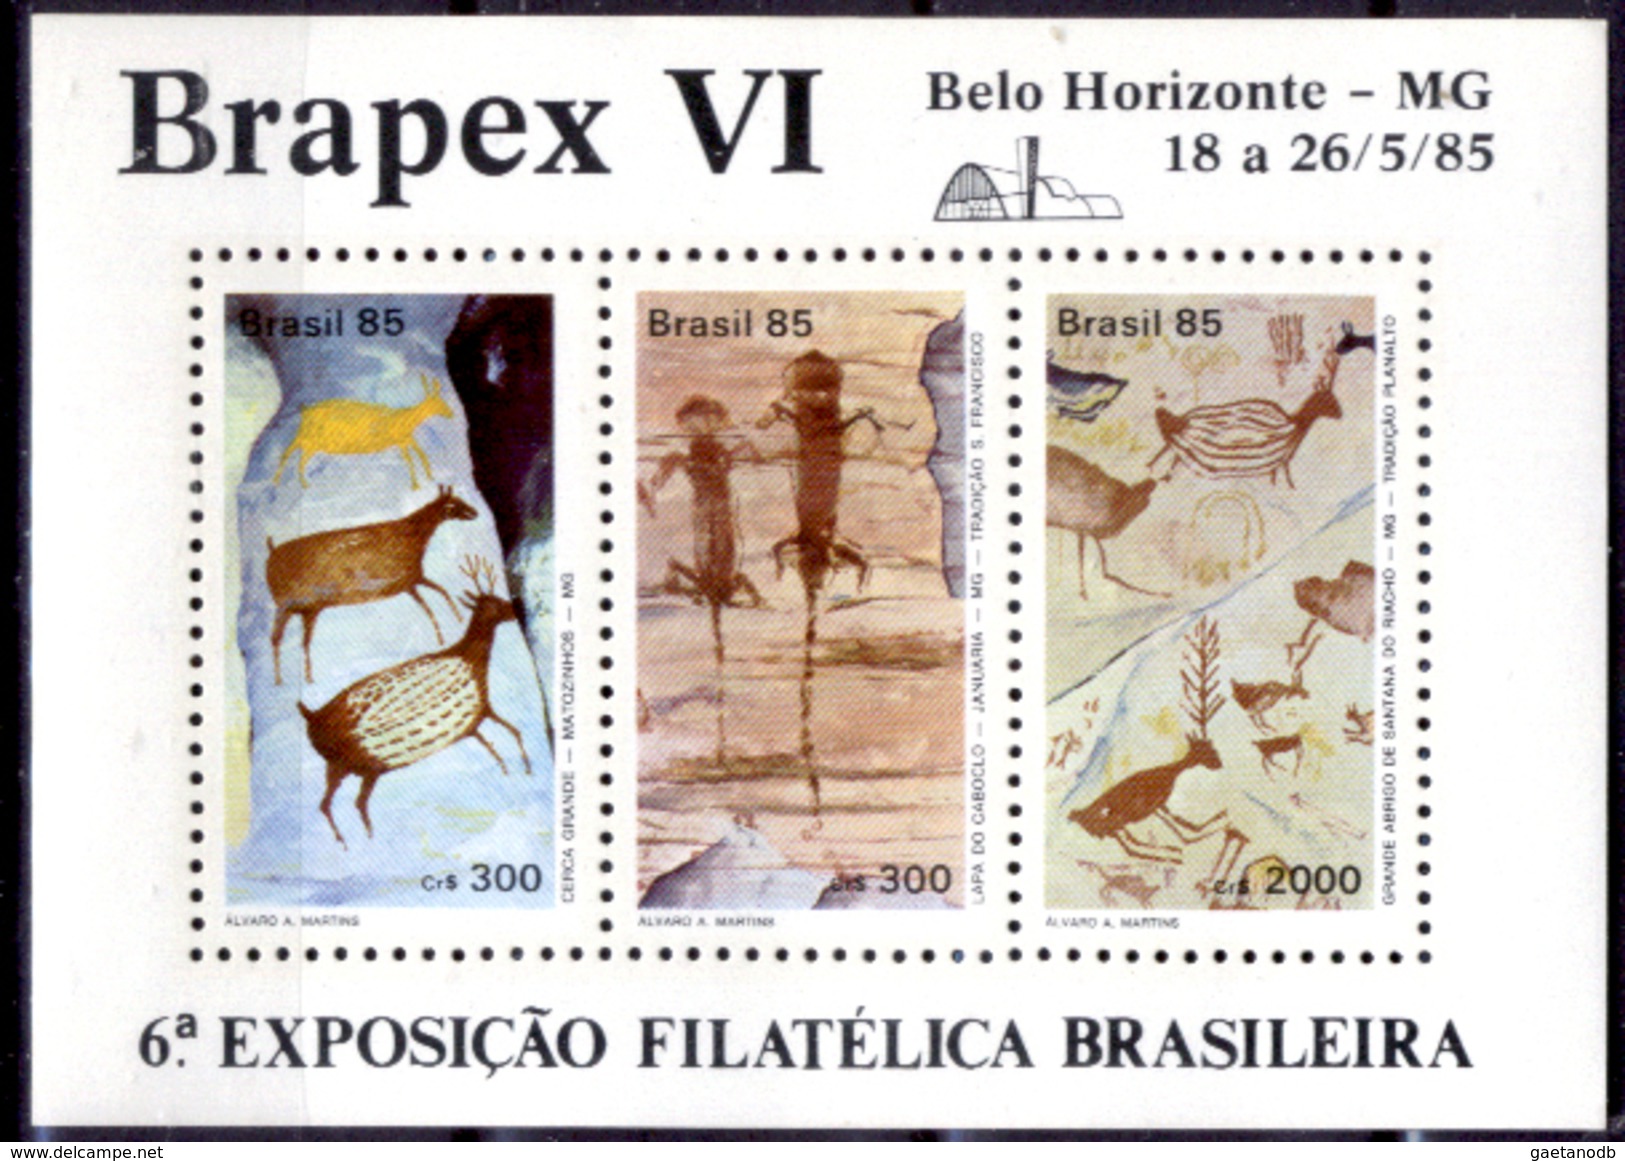 Brasile-006 - 1985 - BF: Y&T N. 66 (++) MNH - Privo Di Difetti Occulti - - Blocs-feuillets